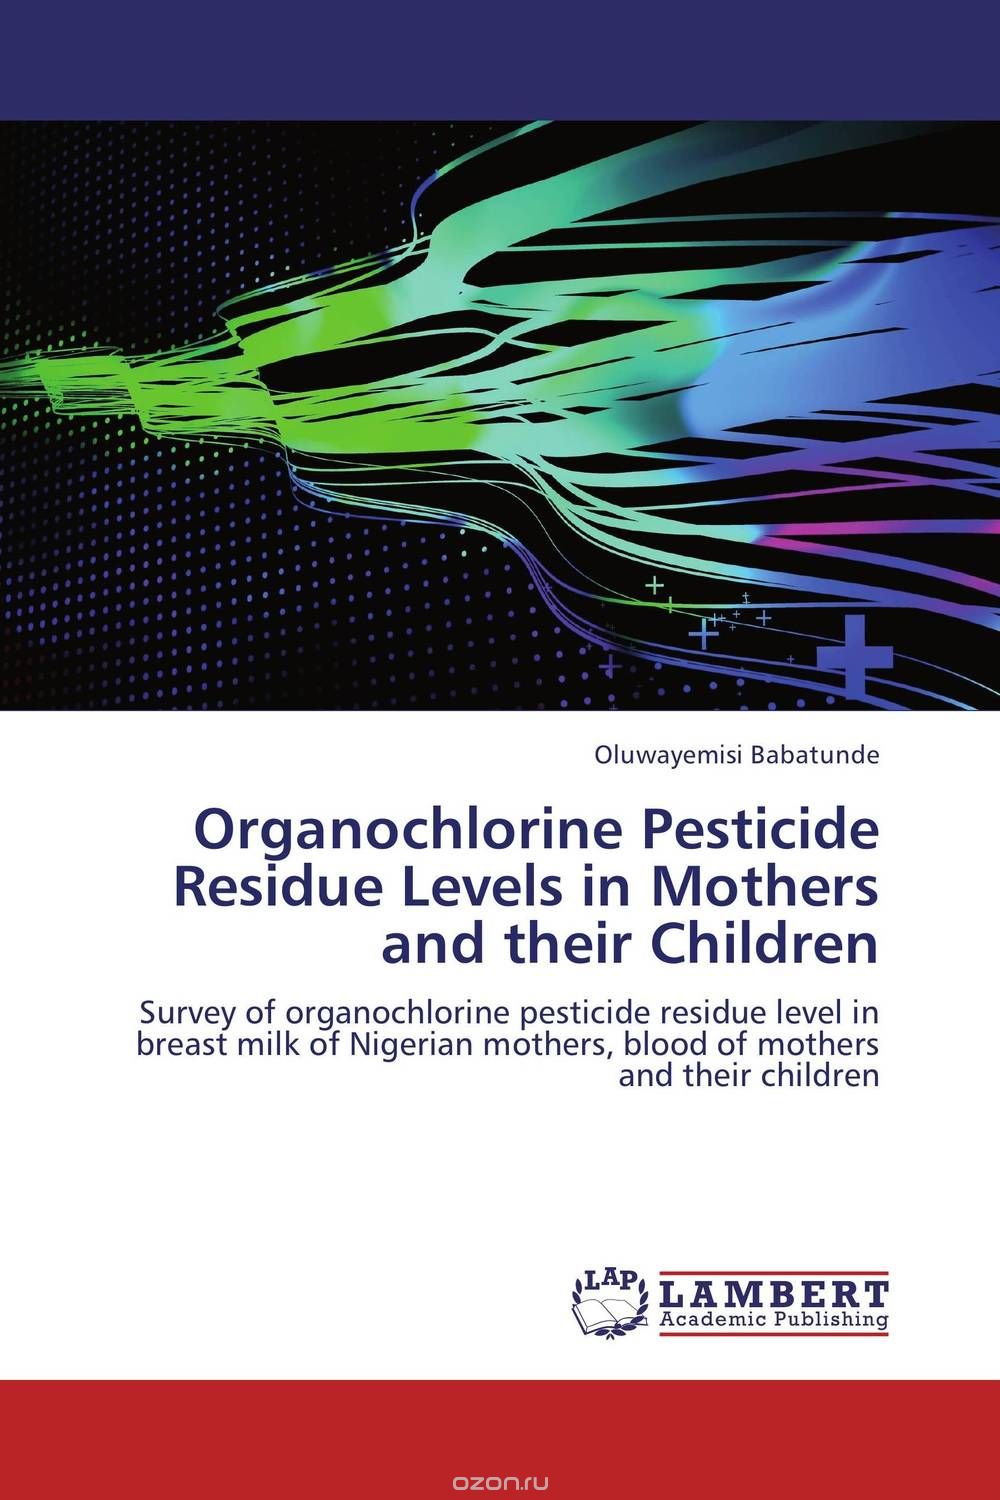 Скачать книгу "Organochlorine Pesticide Residue Levels in Mothers and their Children"